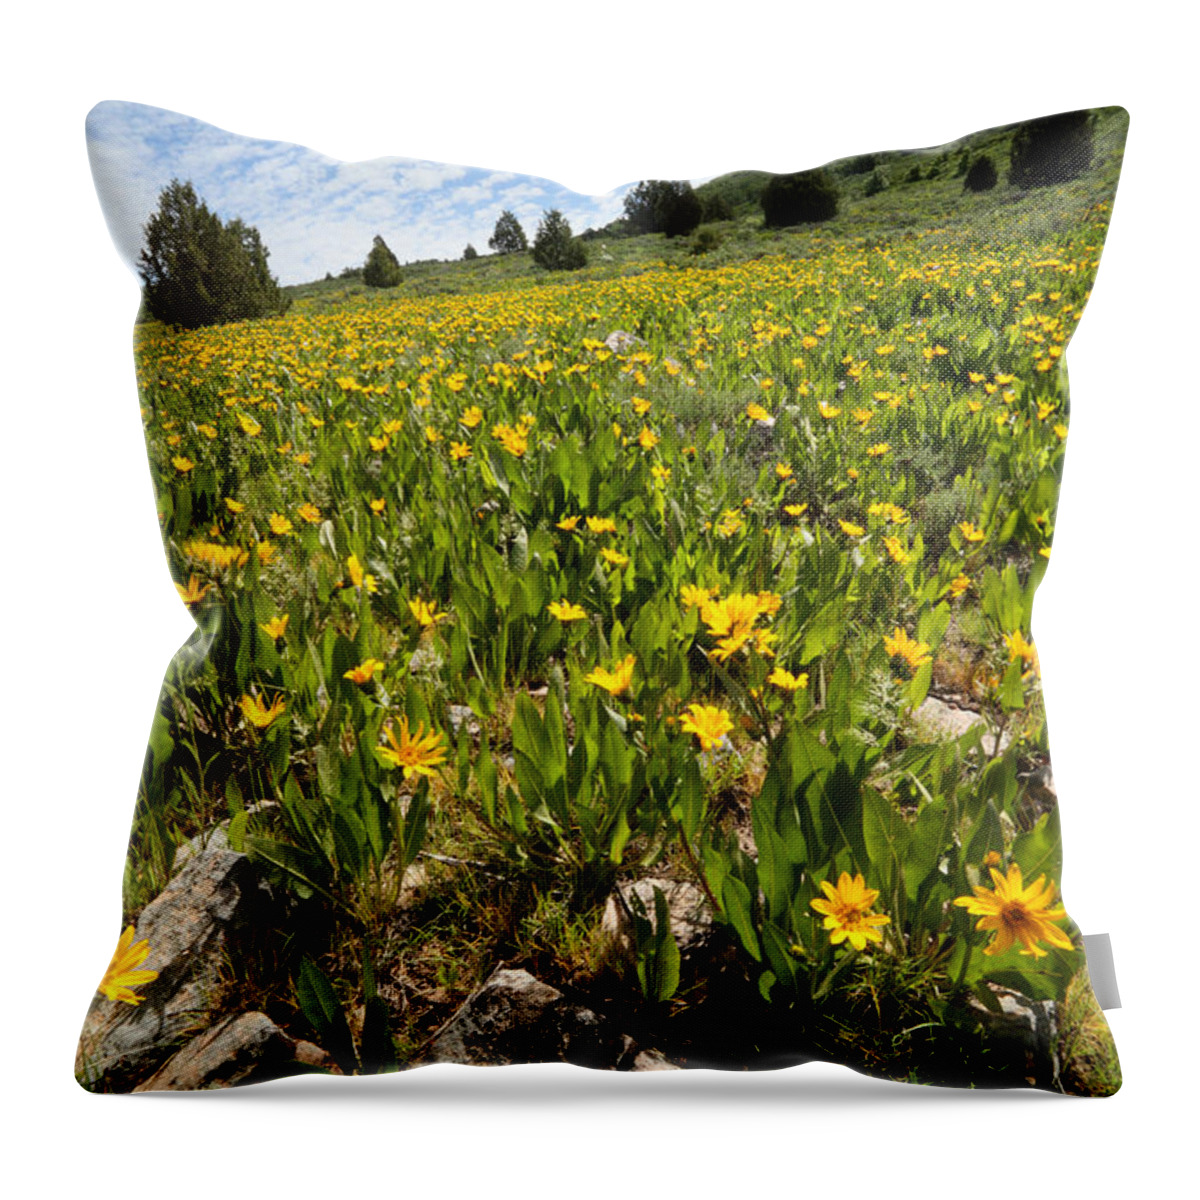 Flower Throw Pillow featuring the photograph Hills of Yellow Flowers by Brett Pelletier